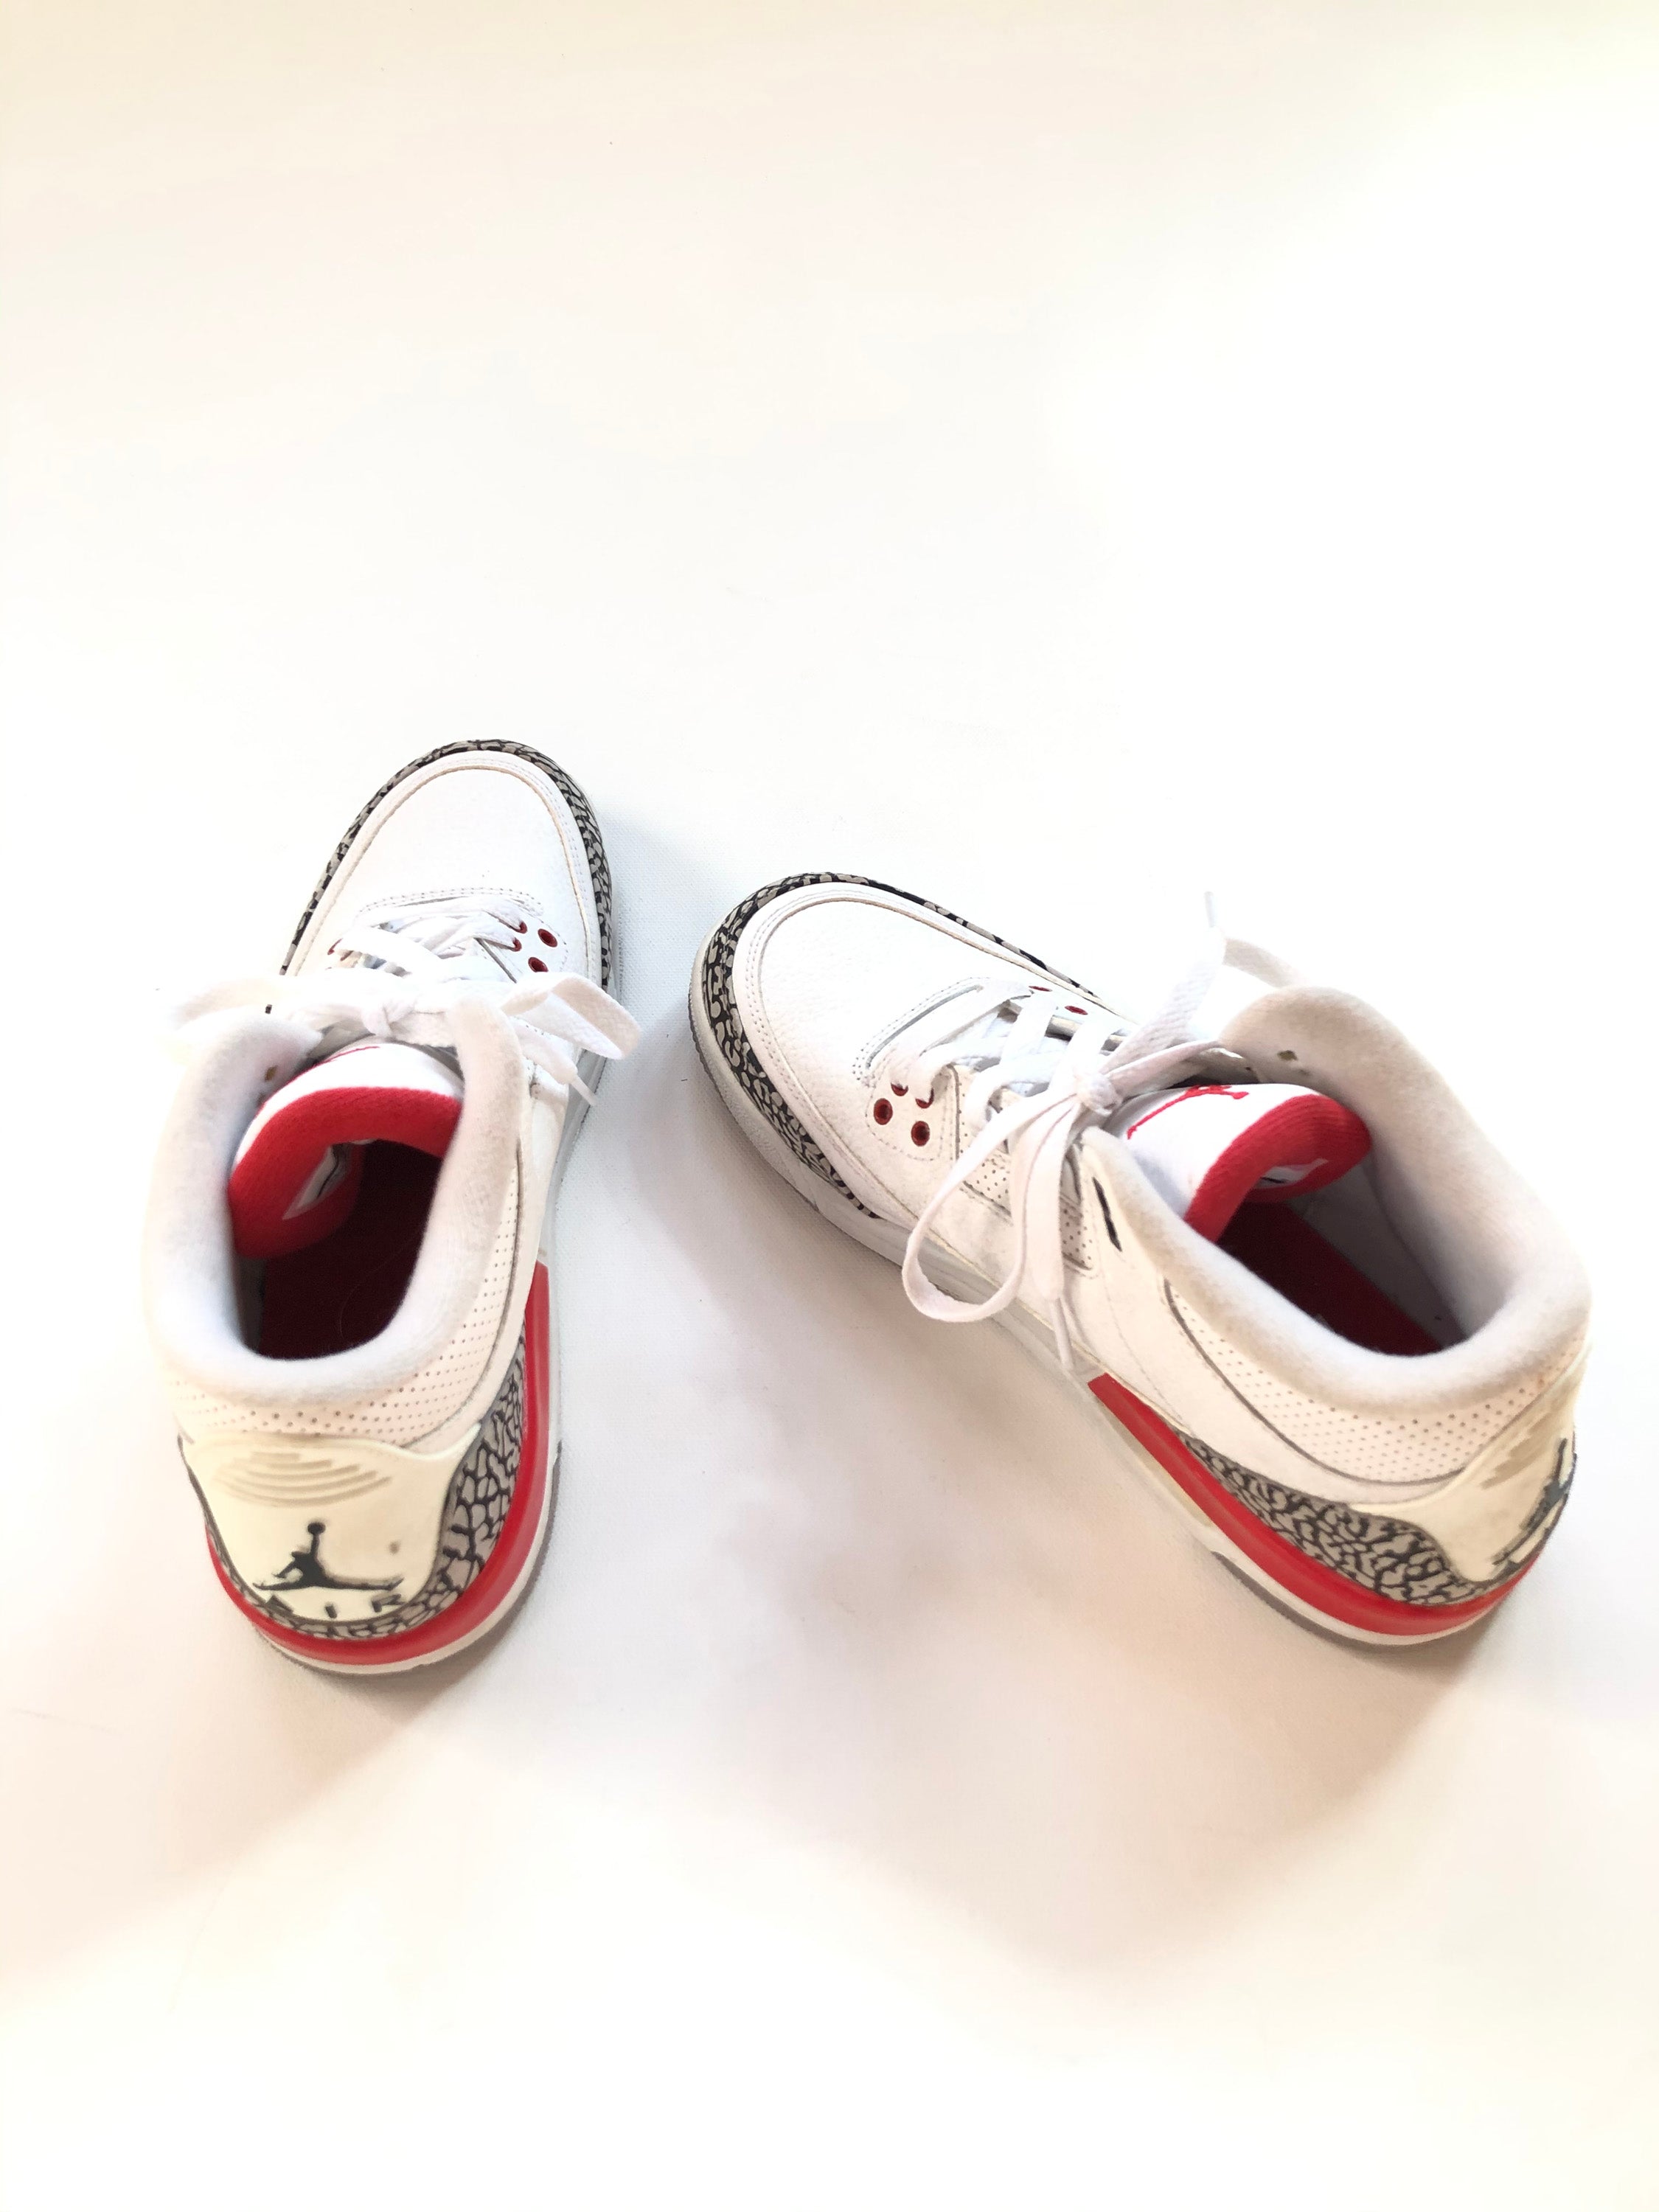 Vintage Air Jordans - White & Red